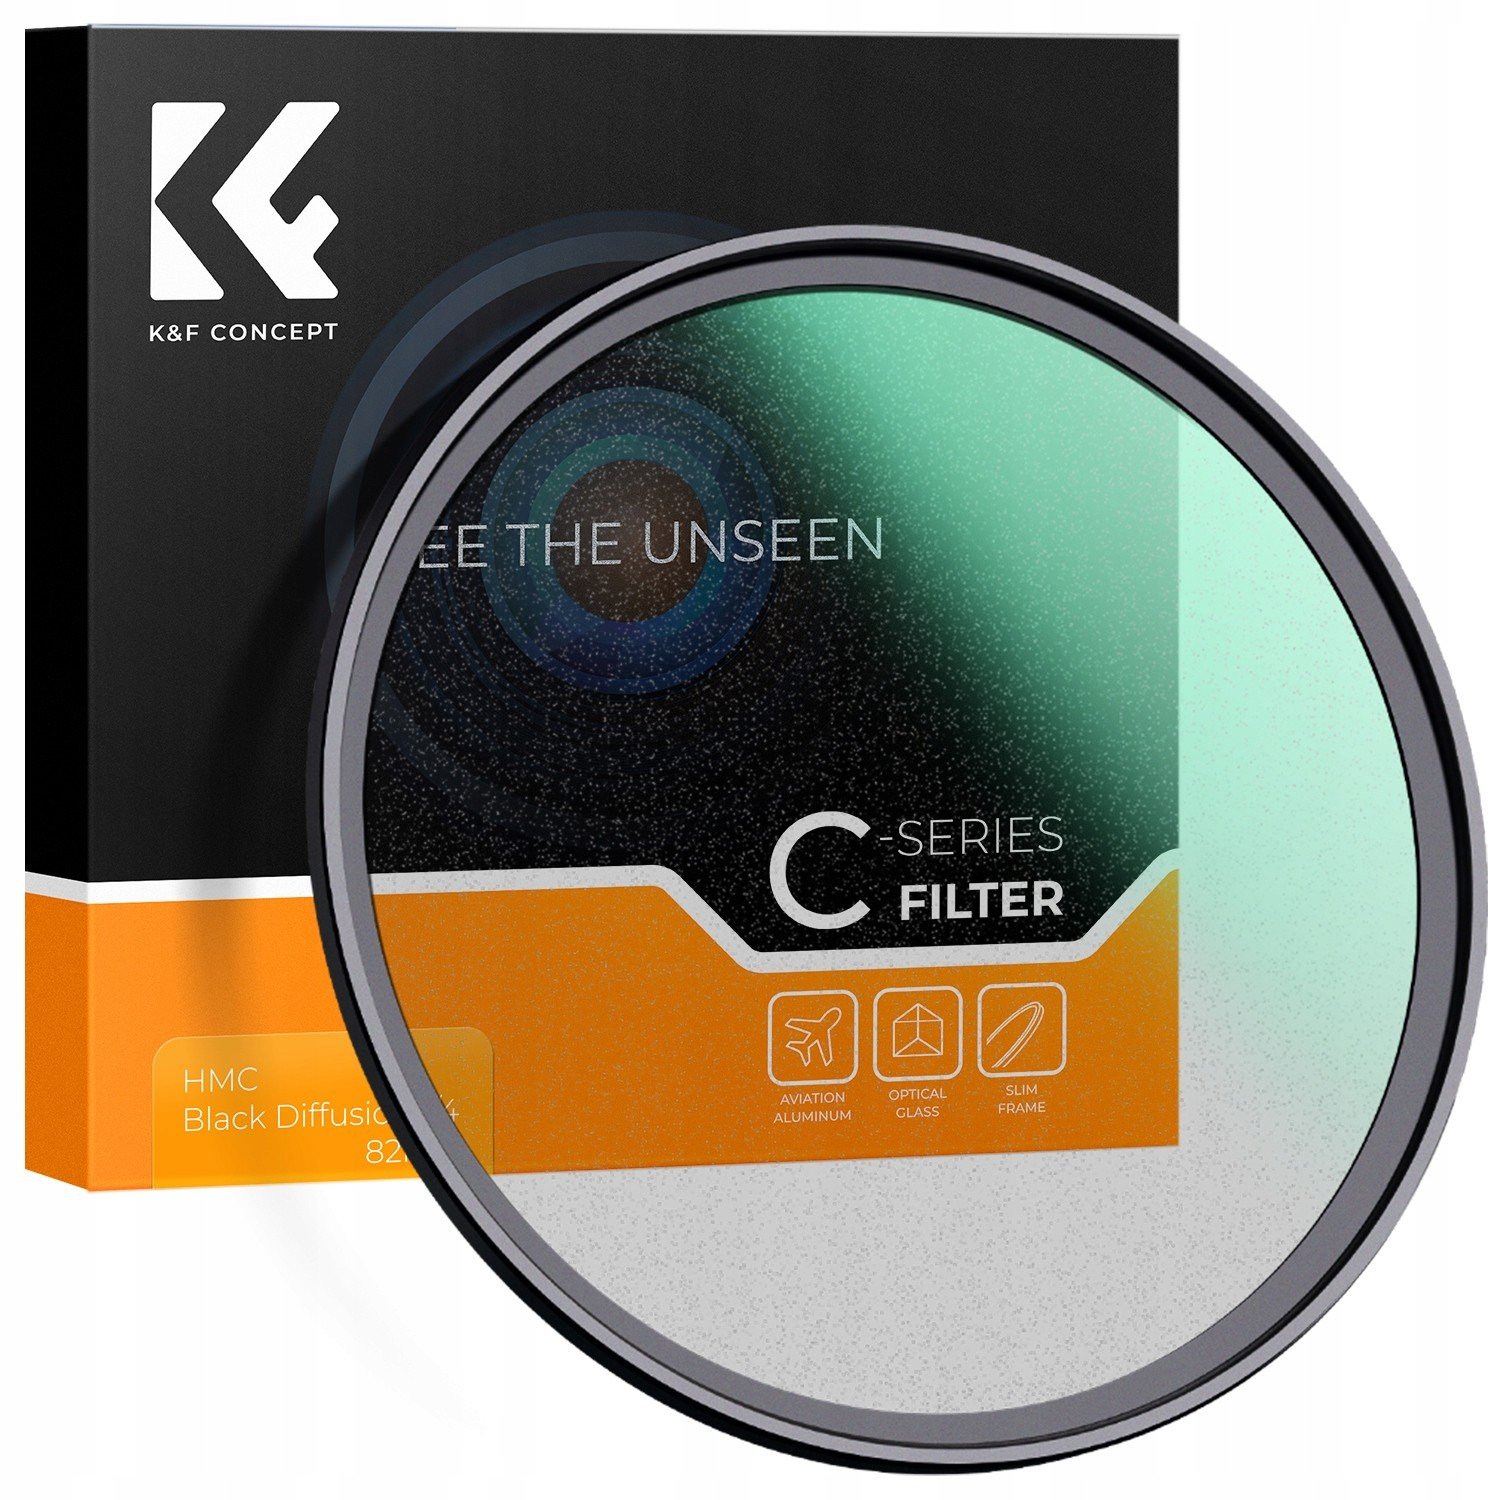 Difuzní filtr Black Mist 1/4 62mm Nano-C K&f